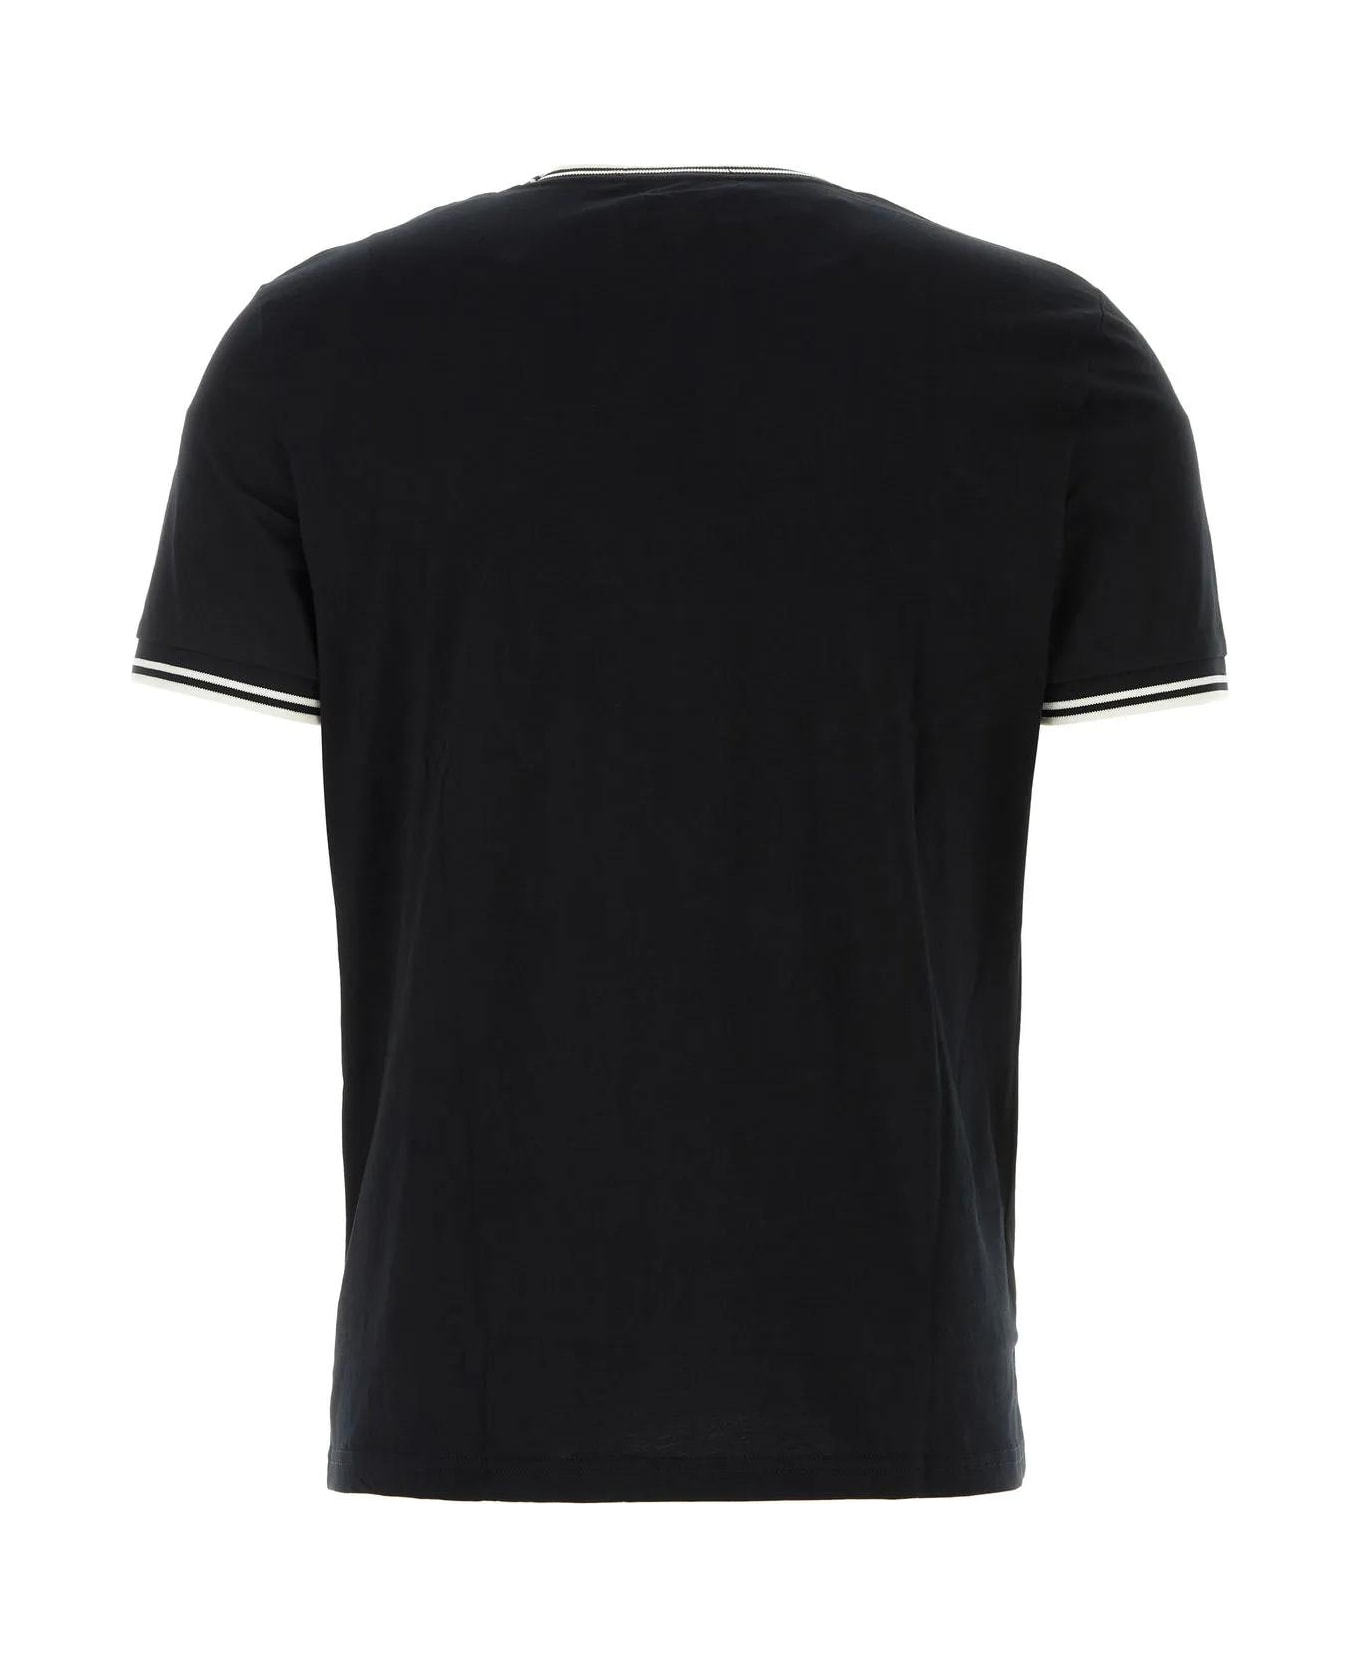 Fred Perry Black Cotton T-shirt - Black